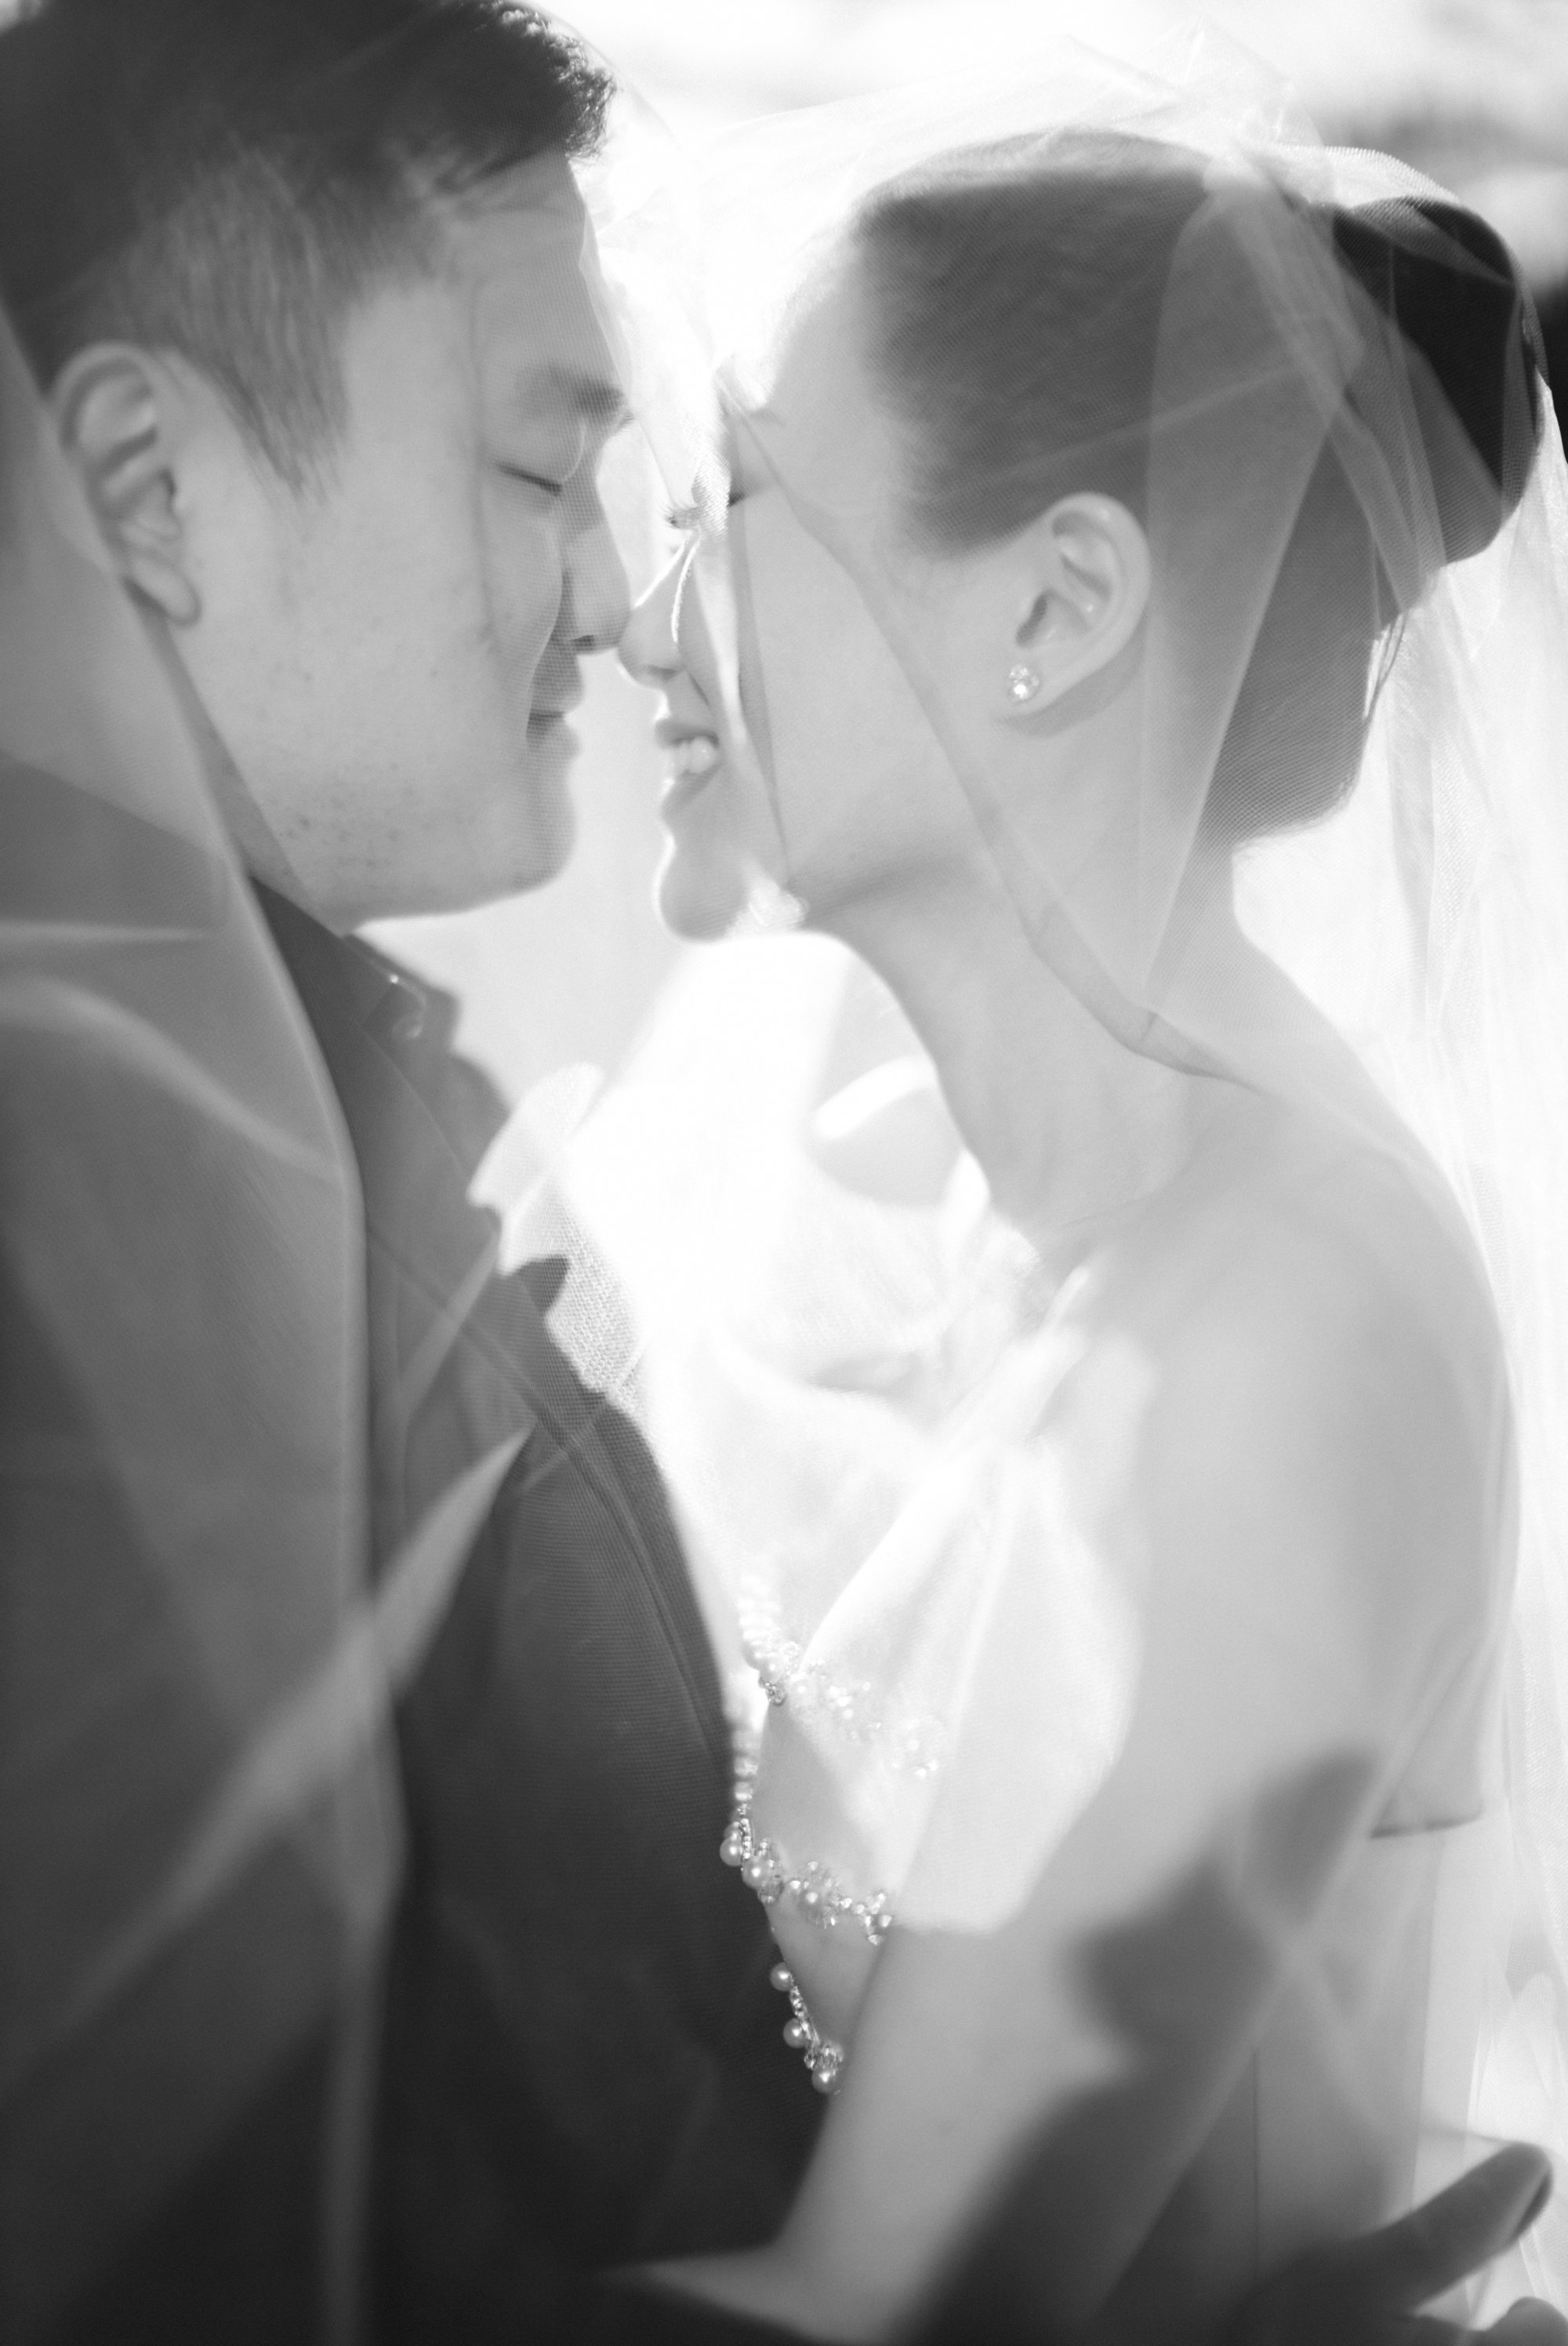 Prawira-Evelyn-Dolomites-Italy-Santre wedding-Yefta Gunawan-Jeriko MUA-Carol Kuntjoro Photography-93.jpg